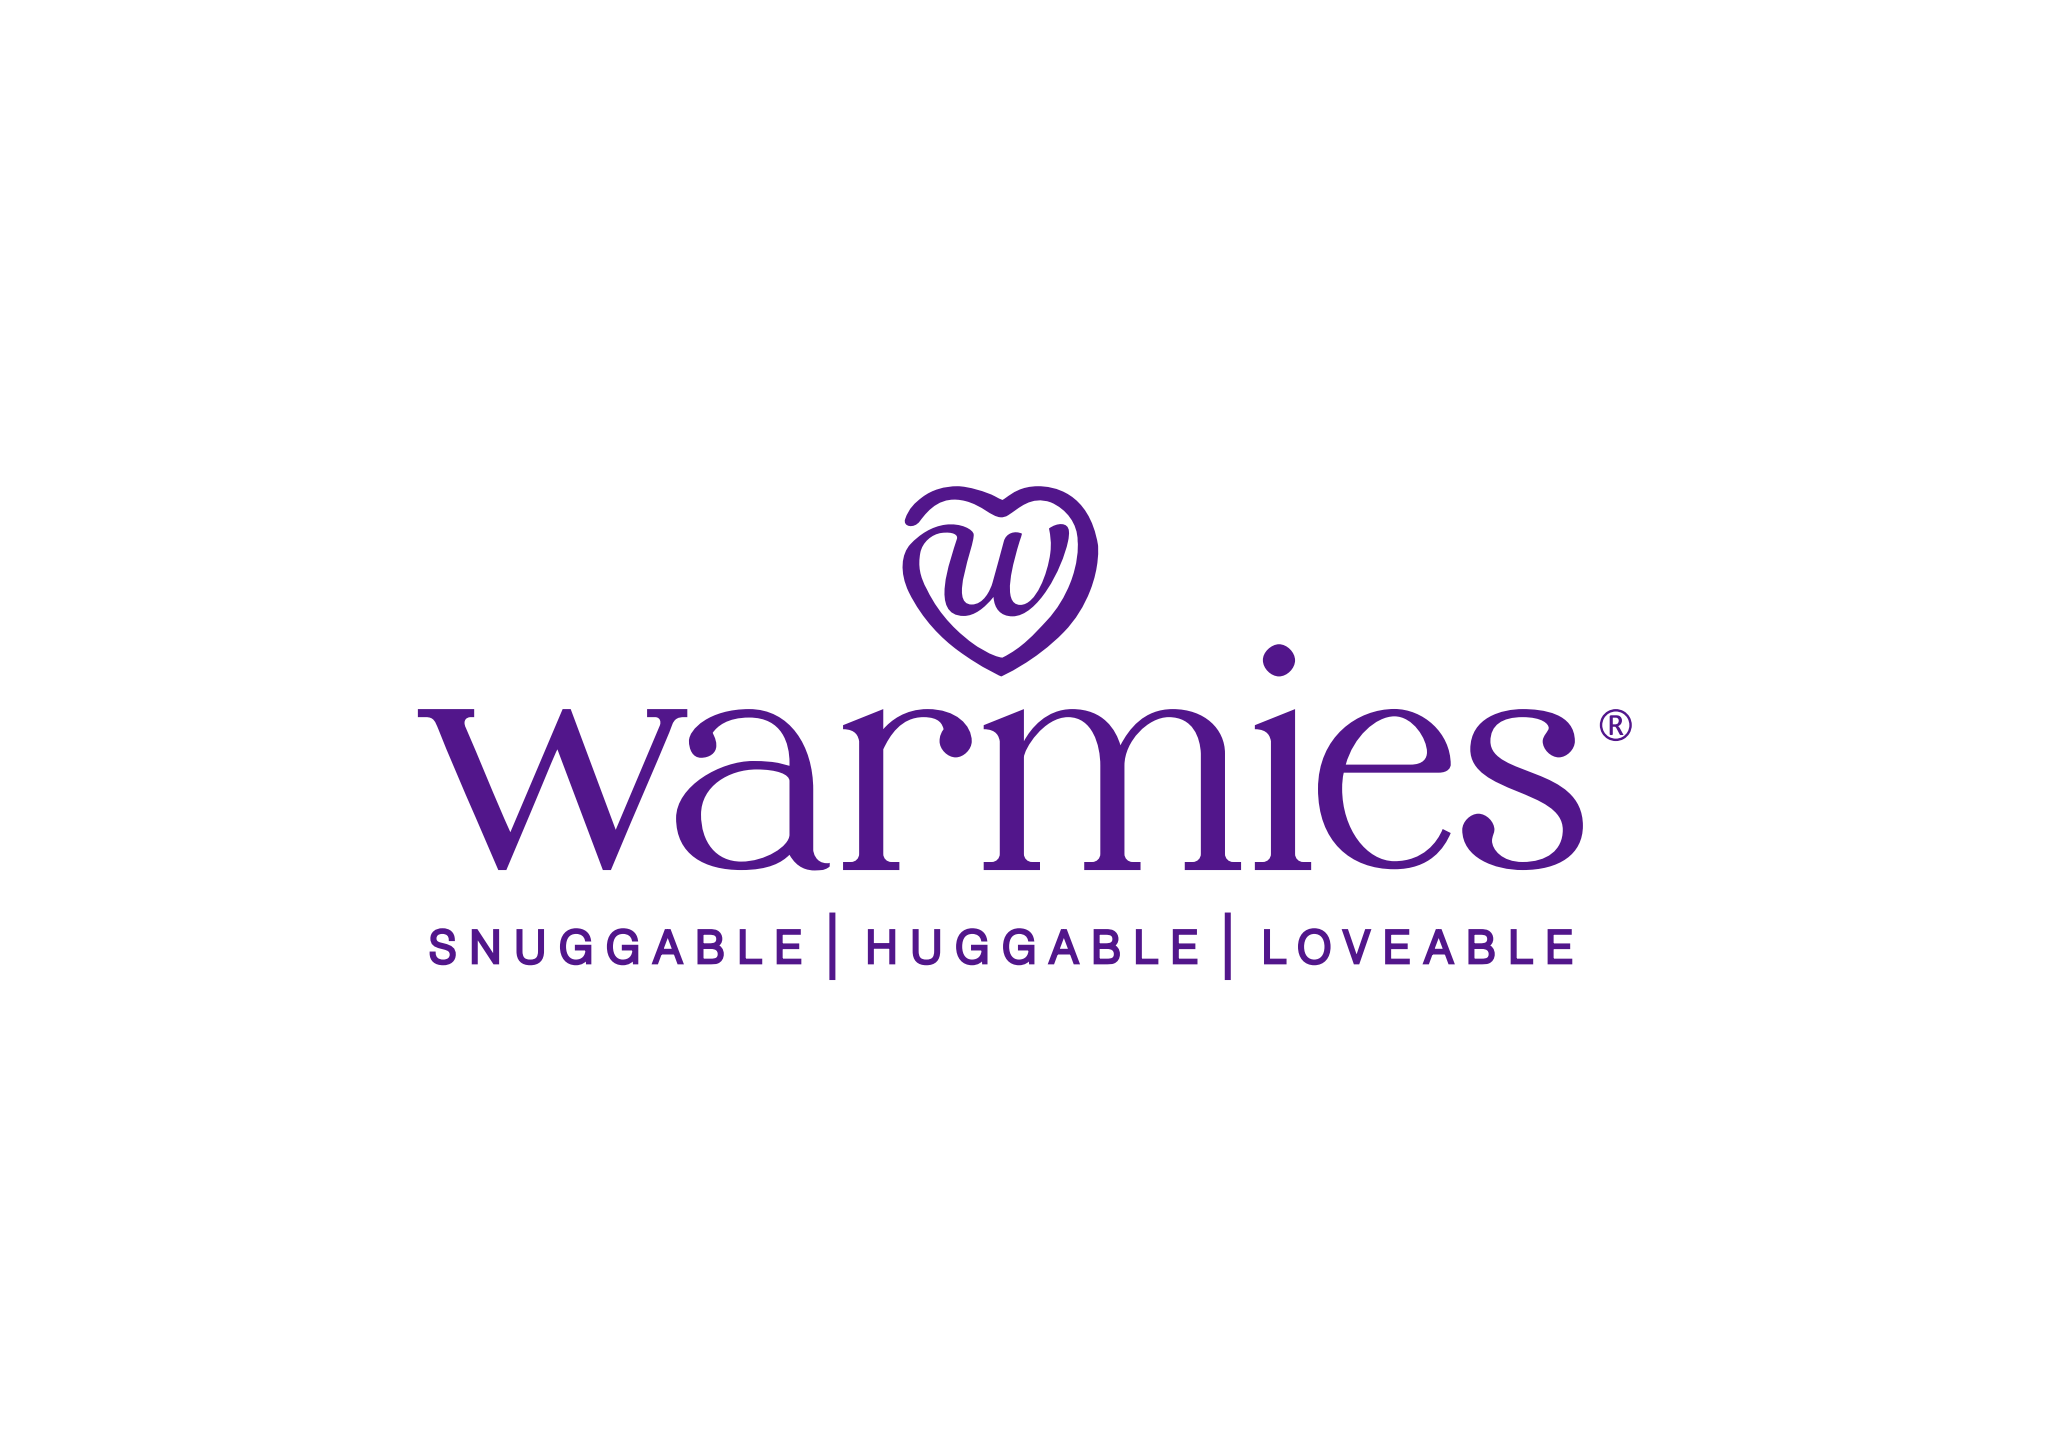 The Warmies logo.